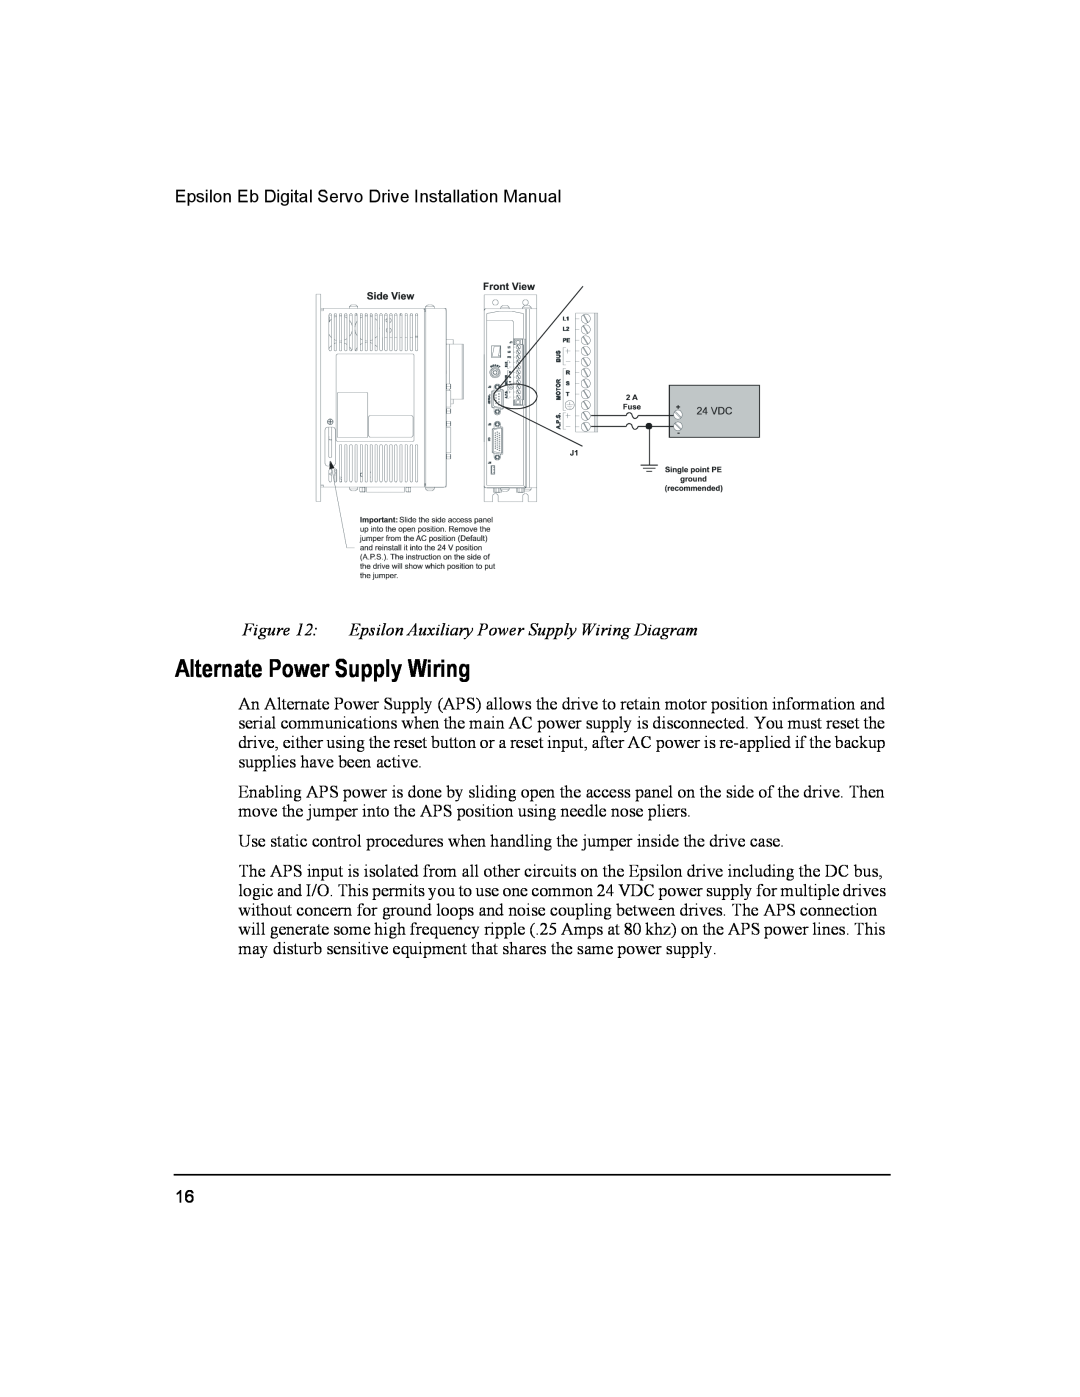 Emerson 400501-05 installation manual Alternate Power Supply Wiring, Epsilon Auxiliary Power Supply Wiring Diagram 